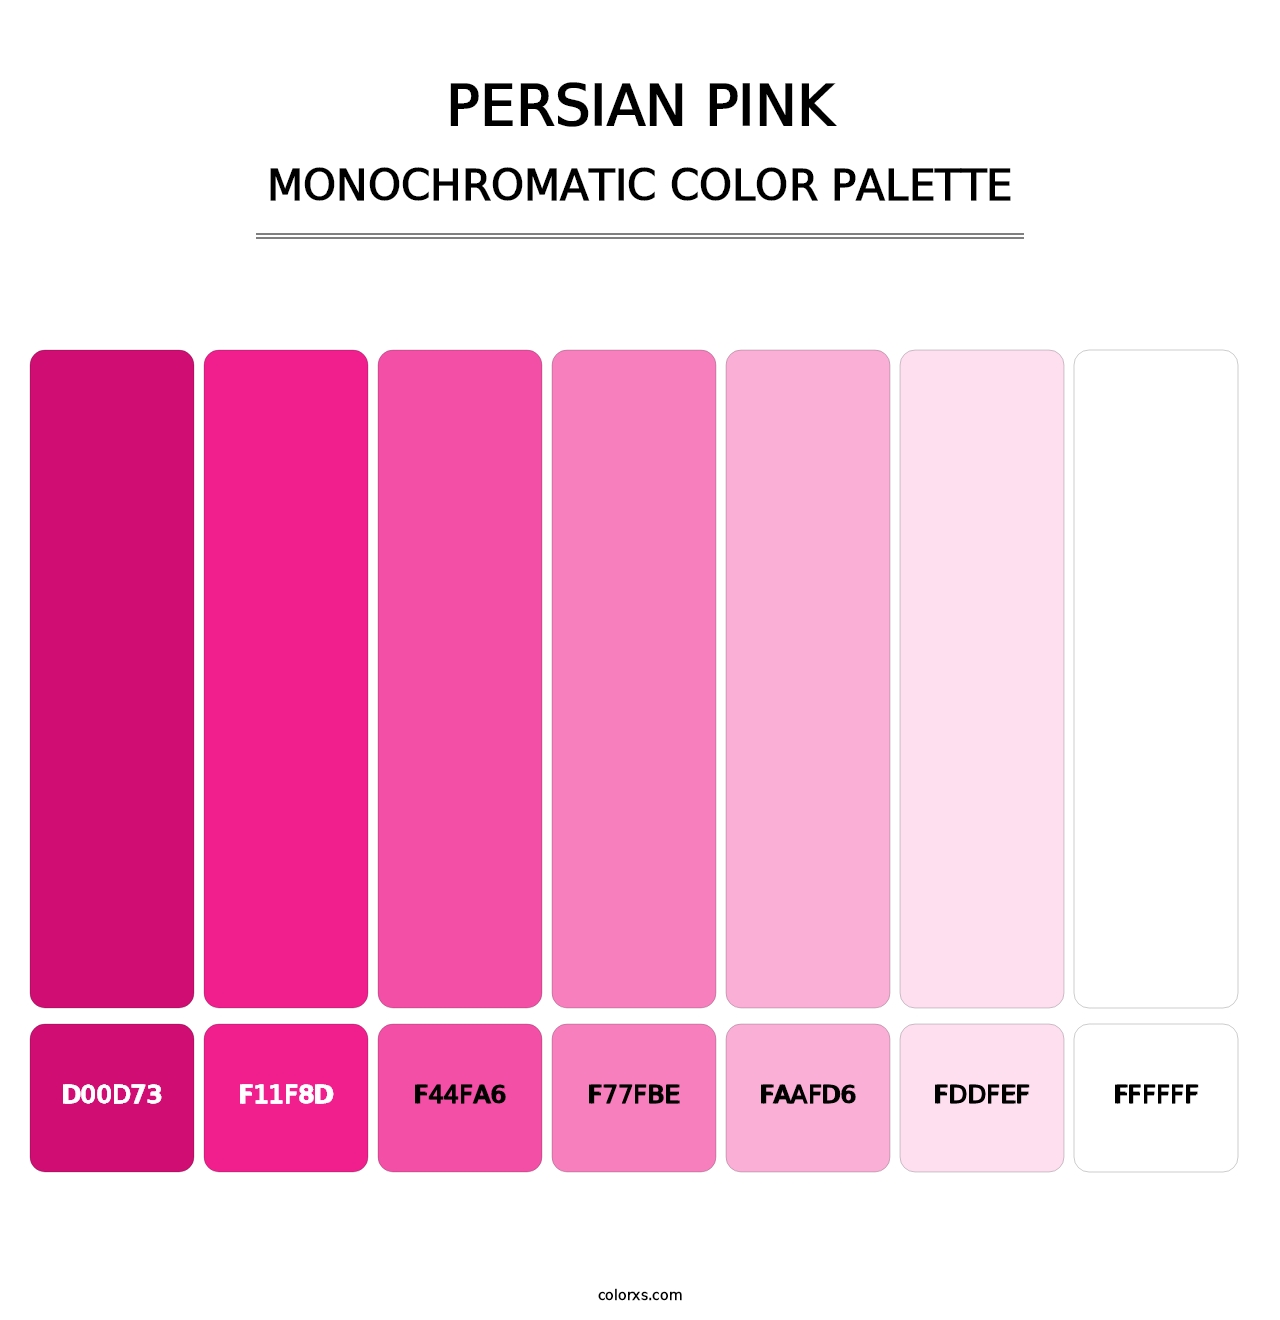 Persian Pink - Monochromatic Color Palette